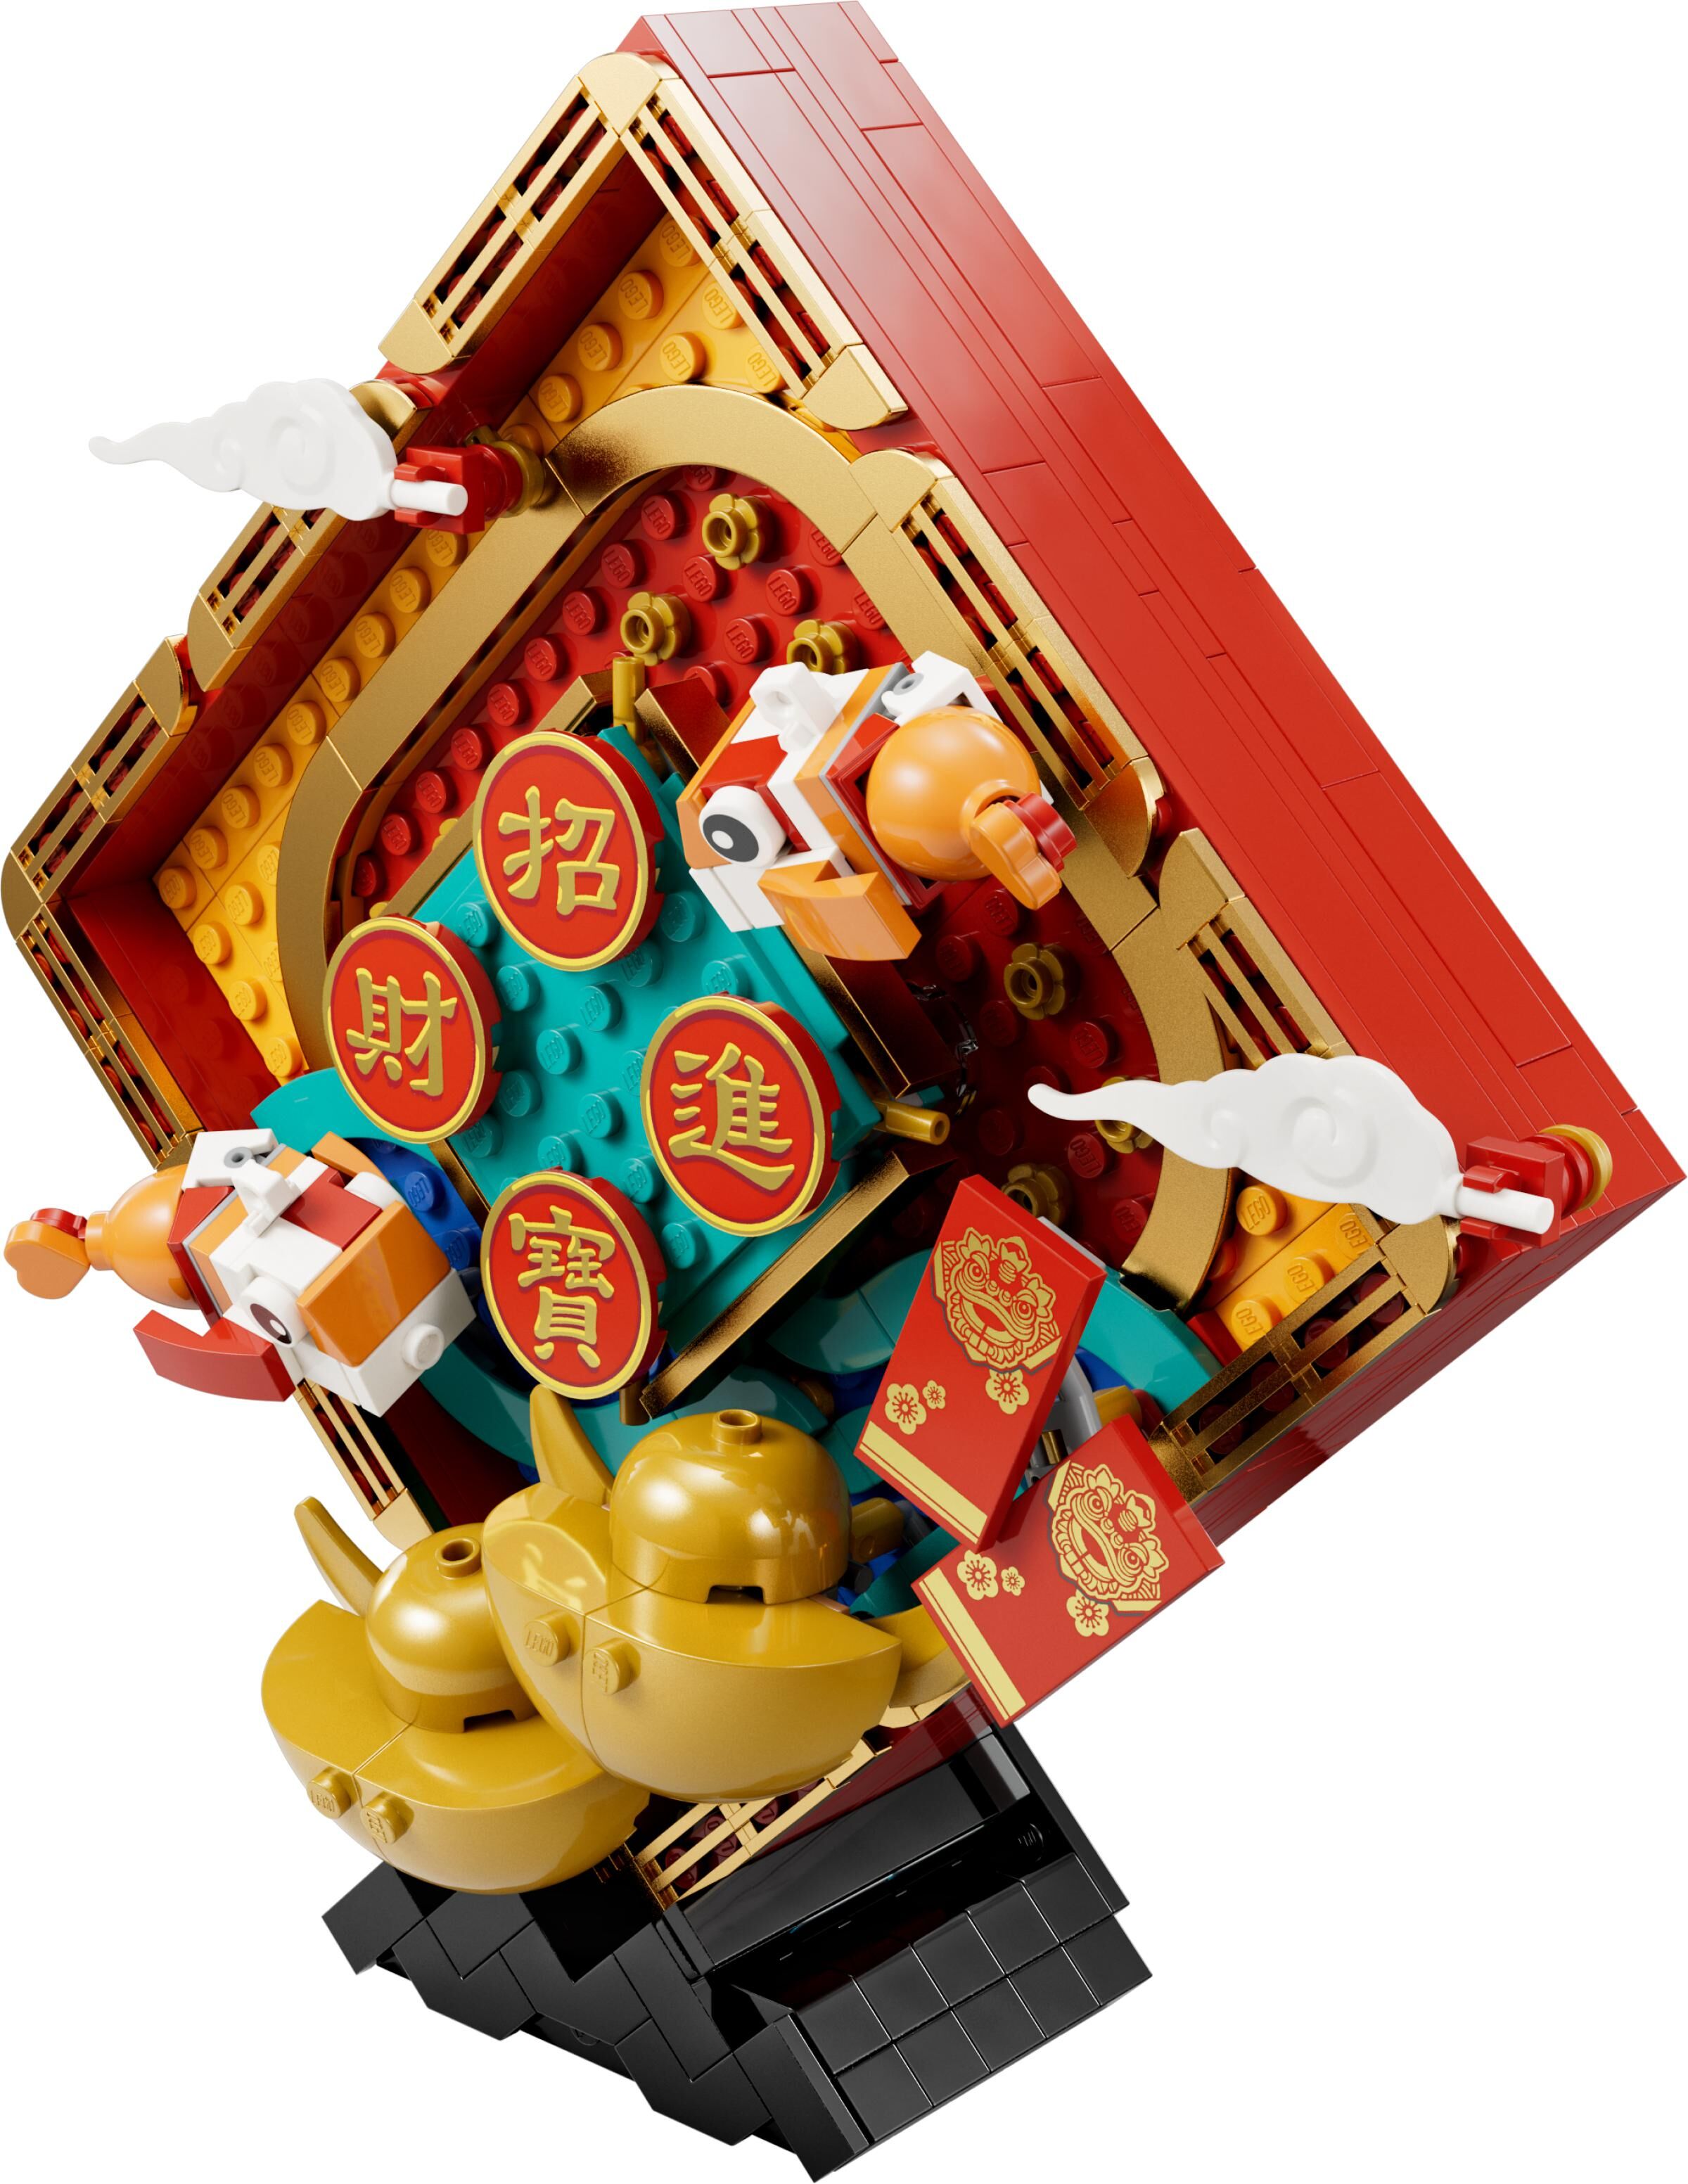 Review: LEGO 80110 Lunar New Year Display - Jay's Brick Blog